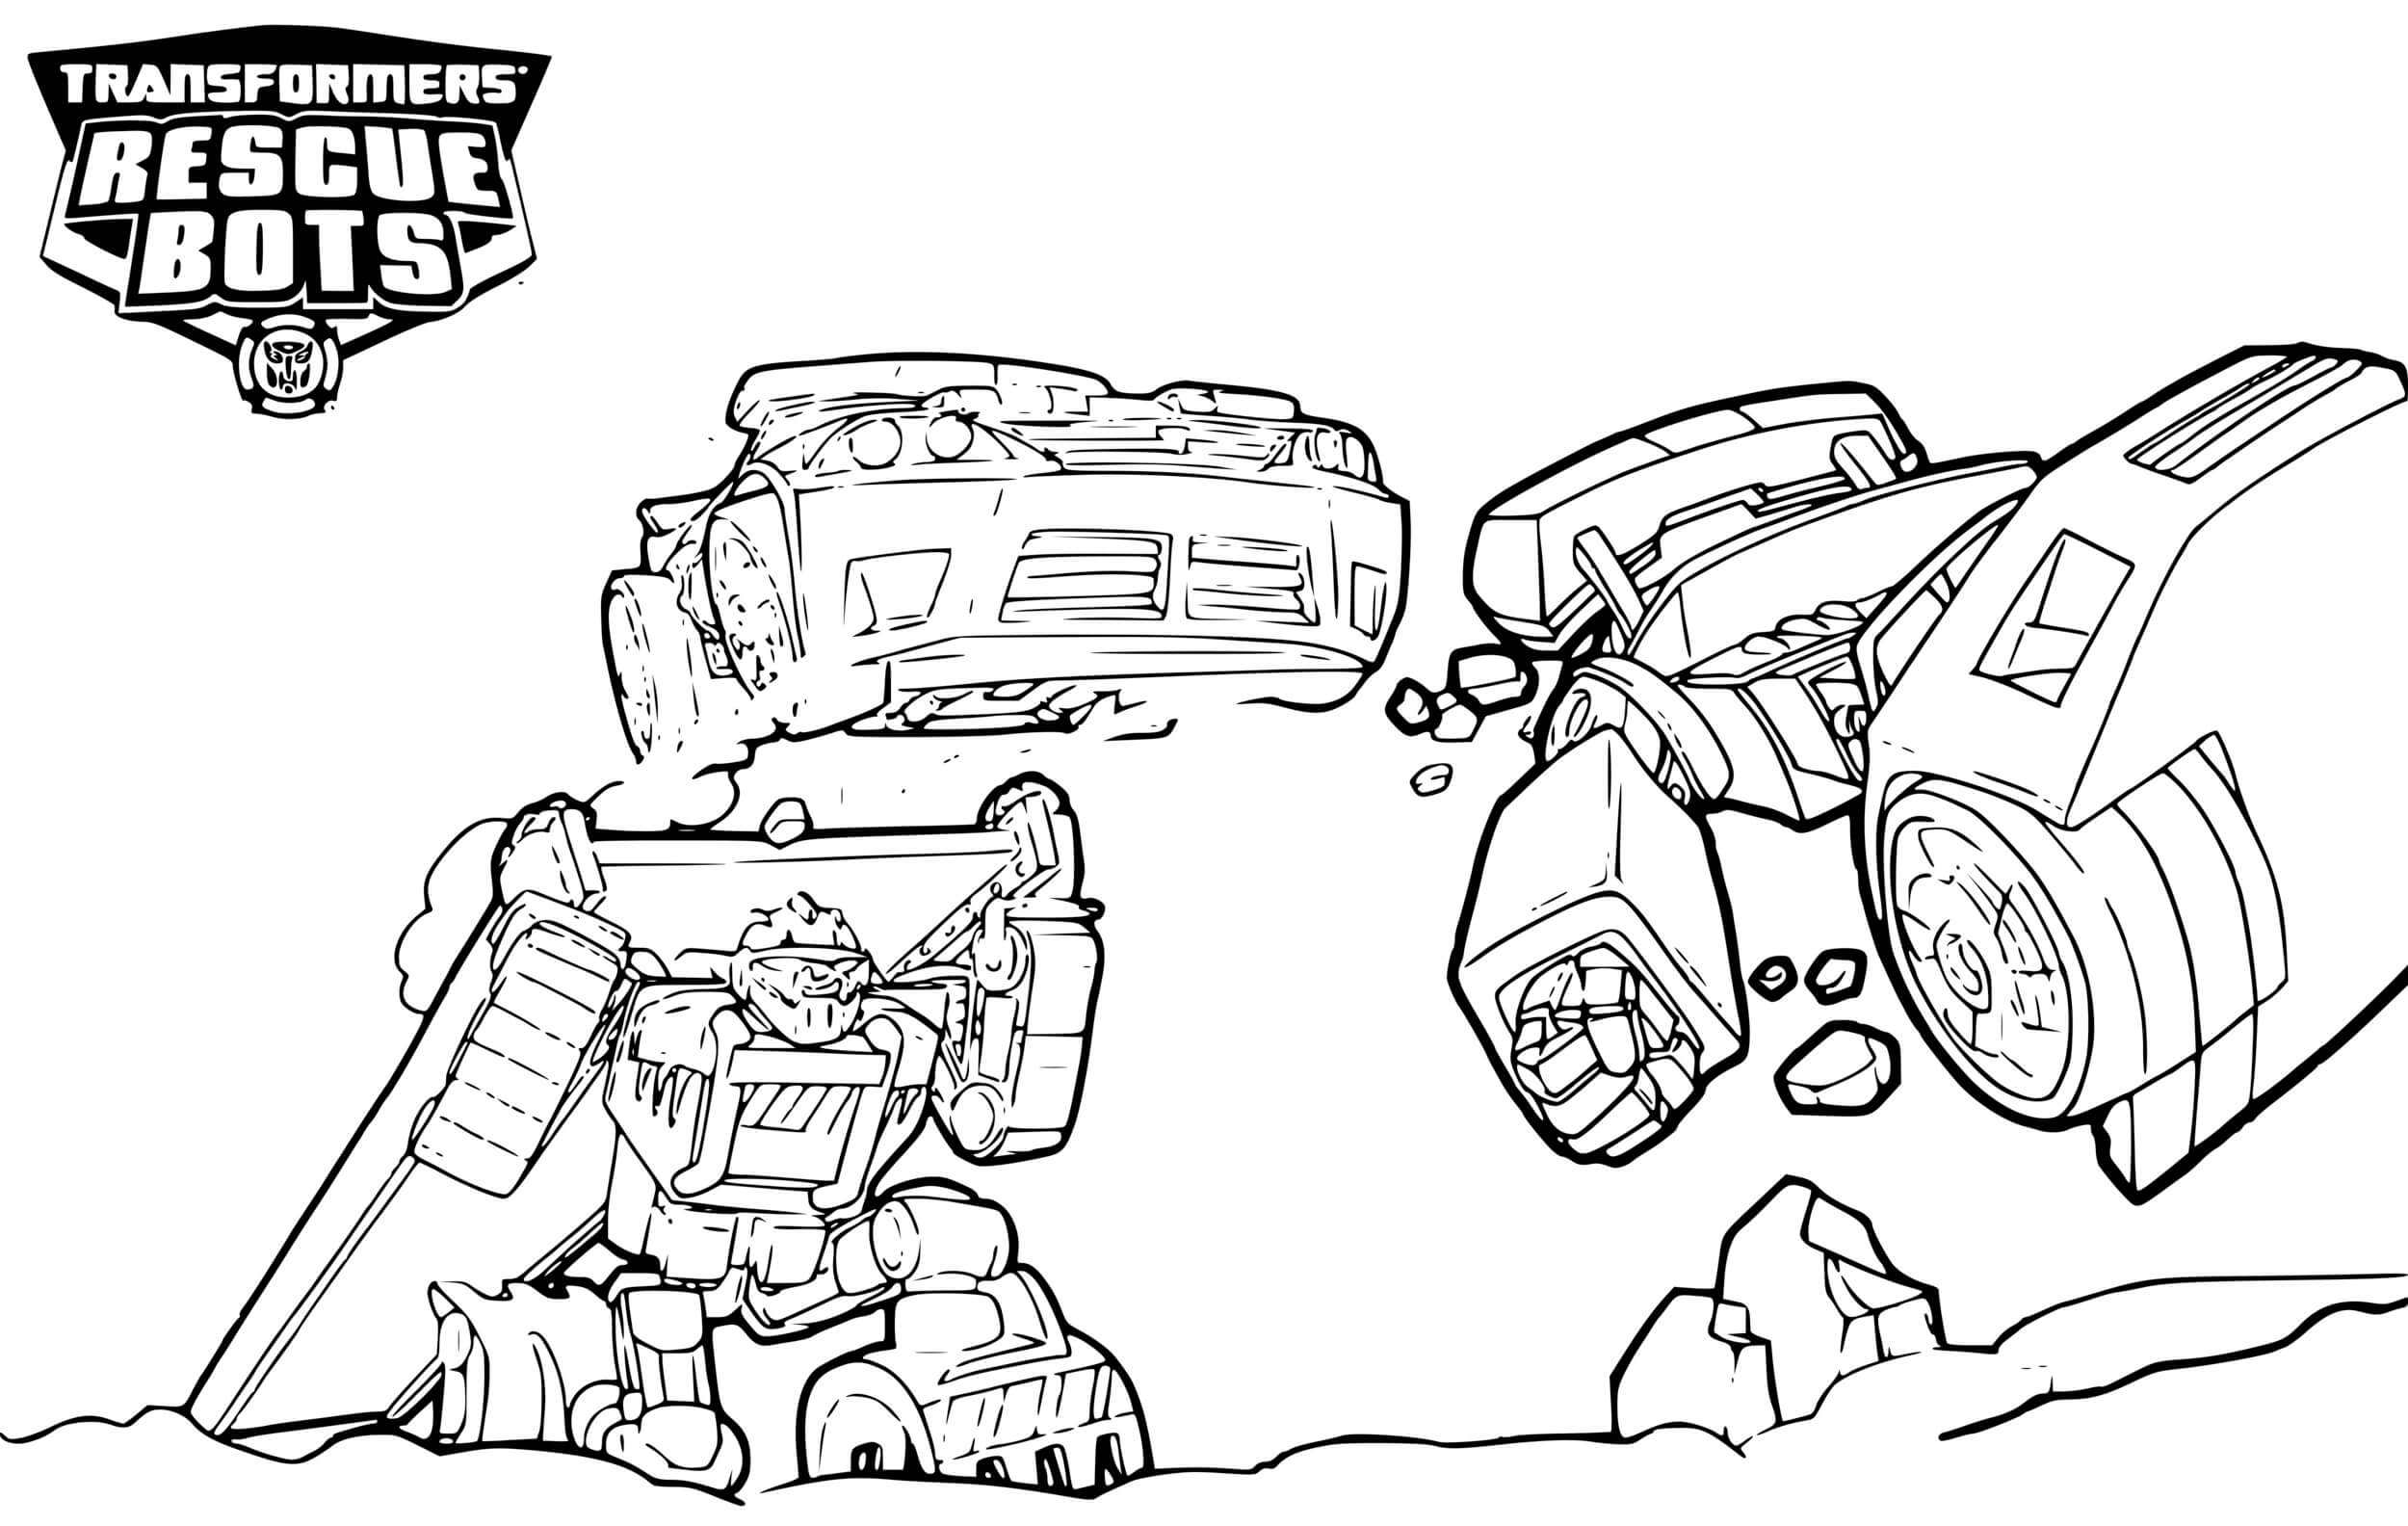 Transformers Rescue Bots Teamwork